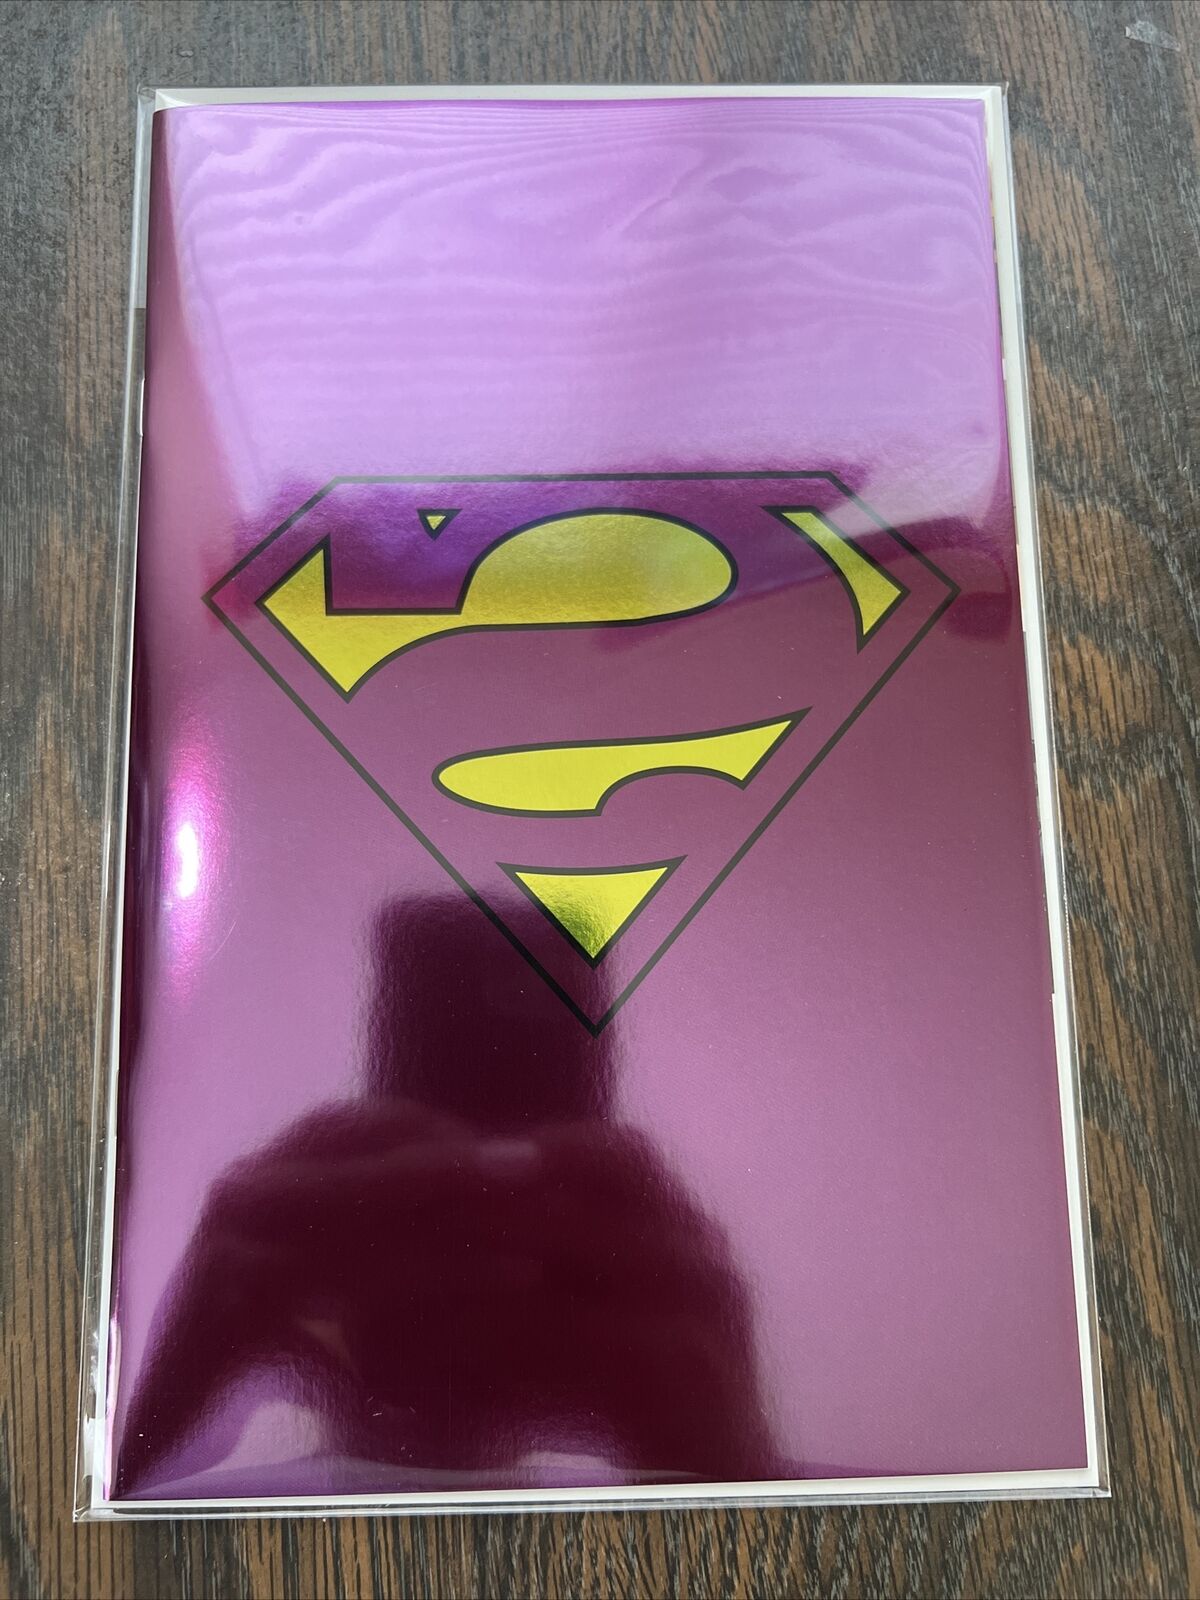 SUPERMAN #4 BIZARRO B’zarro EXCLUSIVE PURPLE FOIL VARIANT Kryptonian clone LE